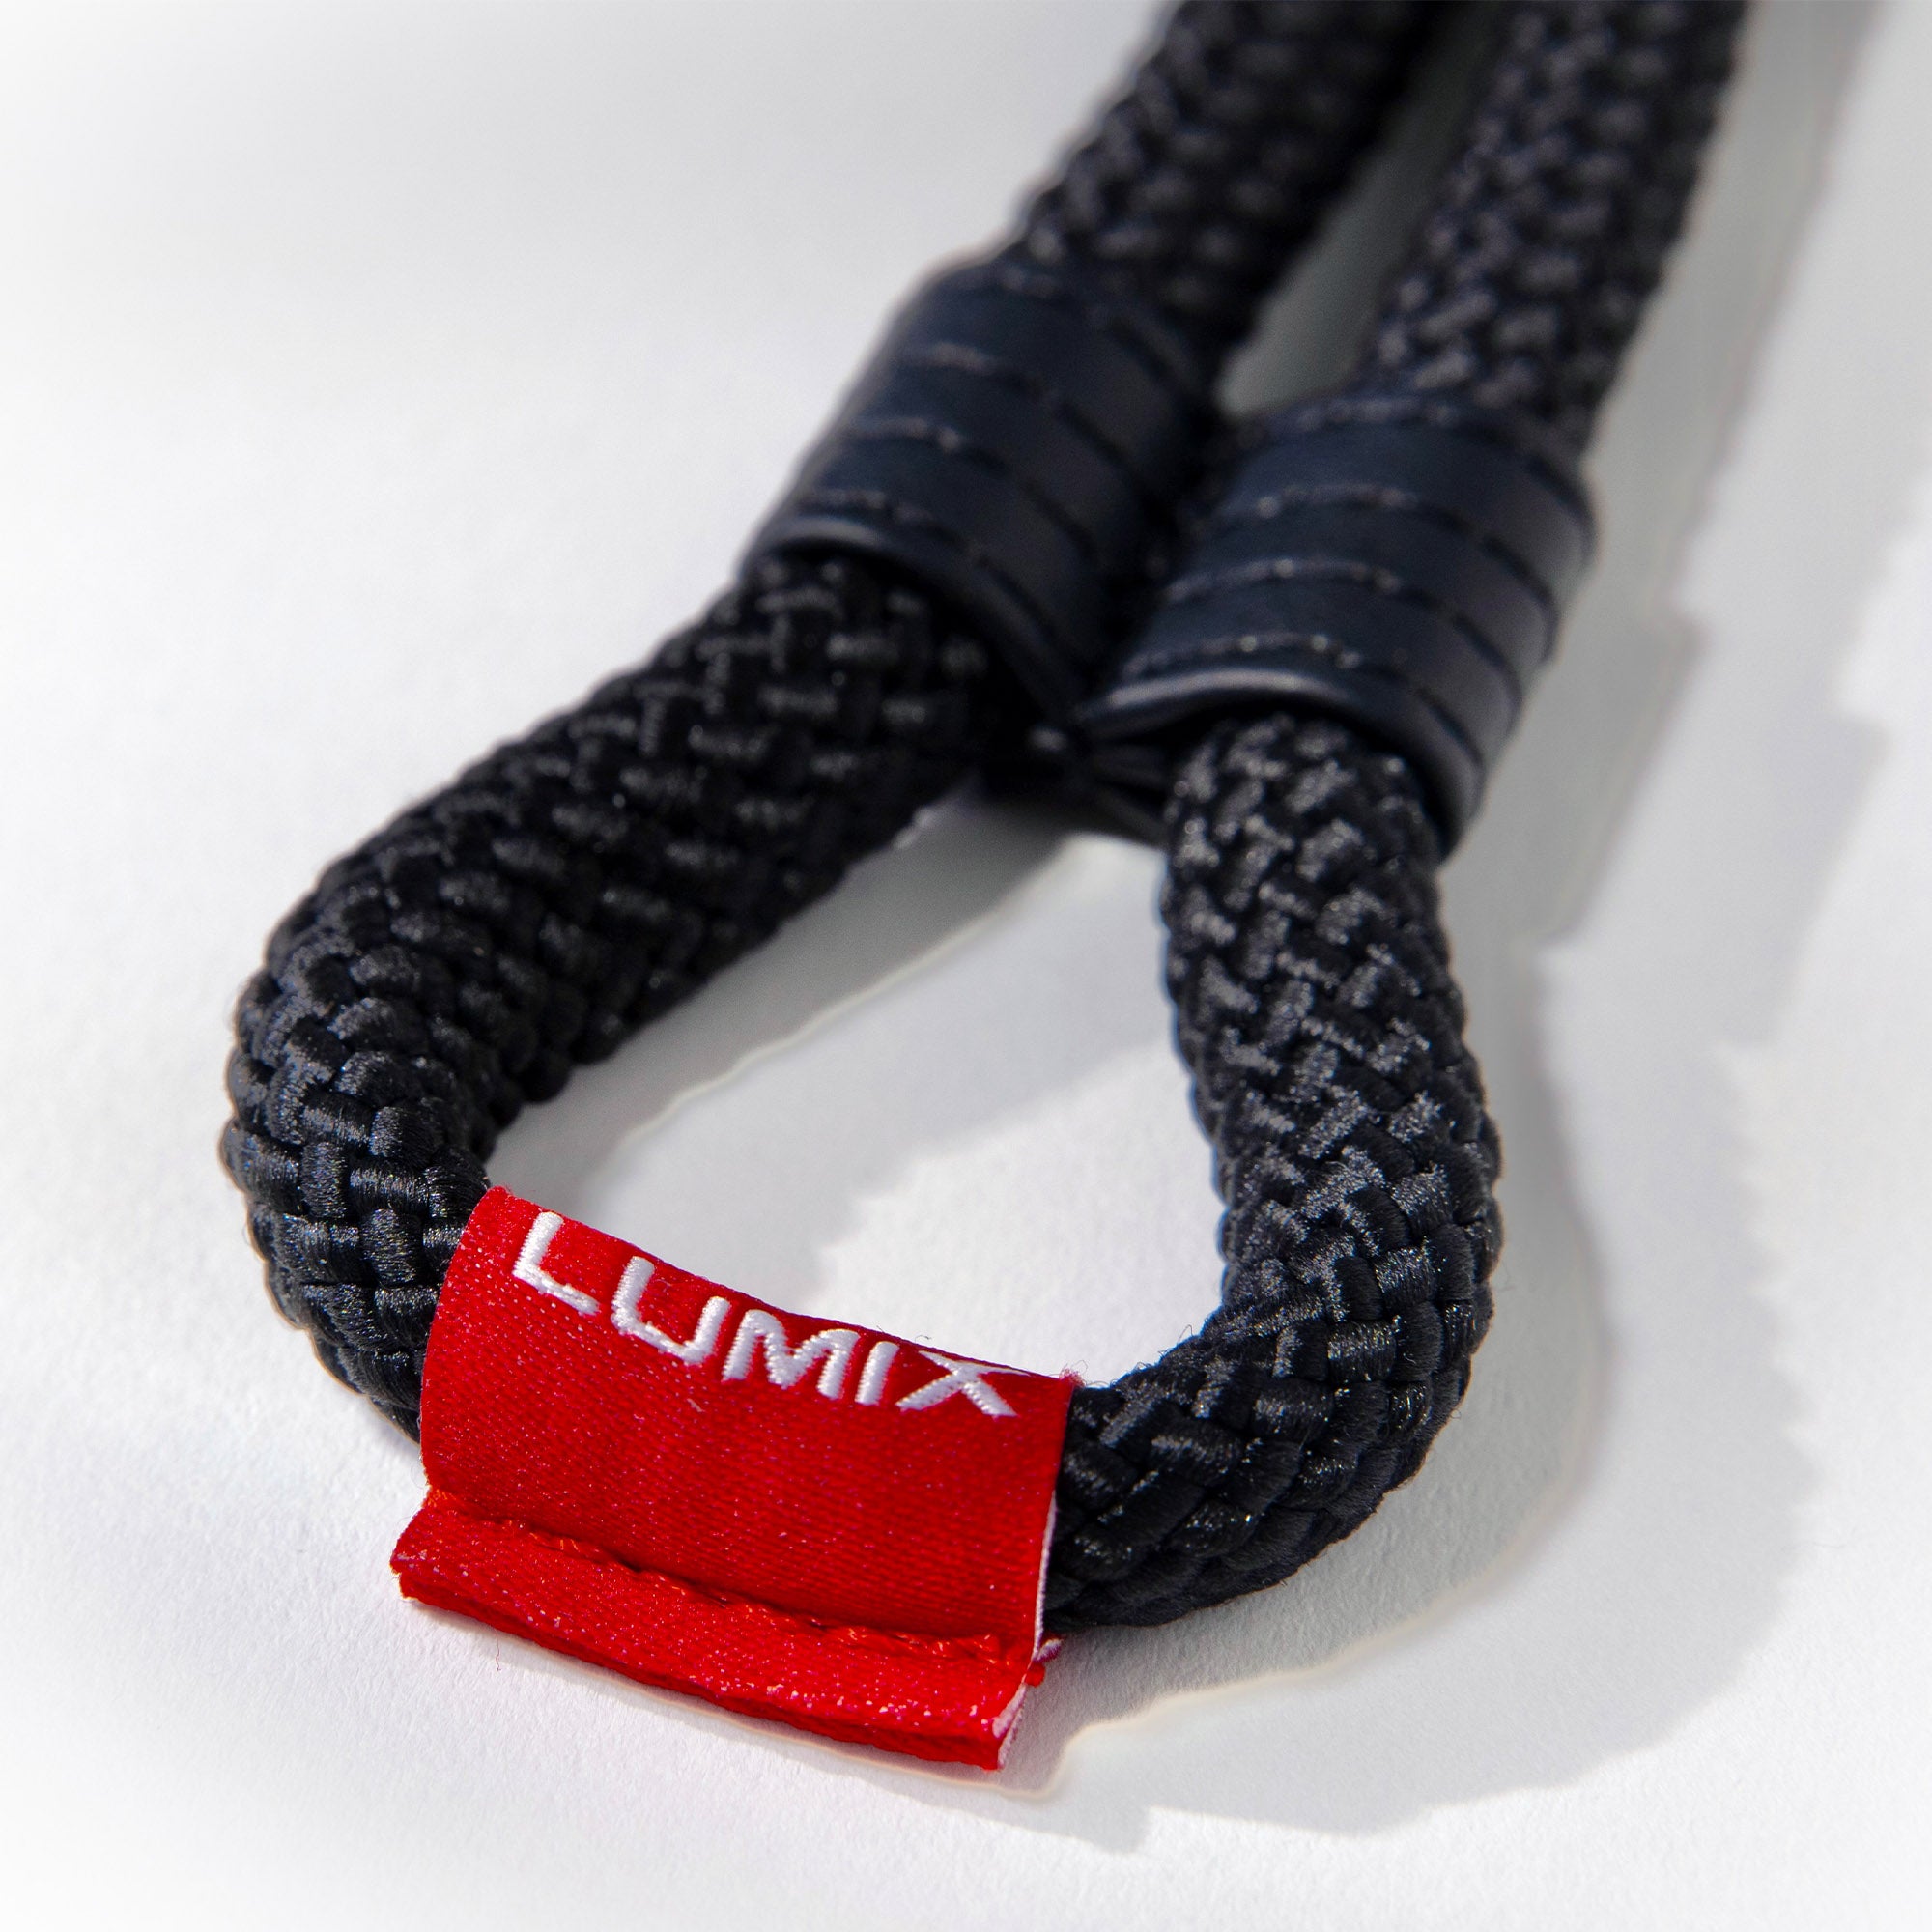 LUMIX Wrist Strap, Shoulder Strap for LUMIX S9 Camera, Red or Black Label